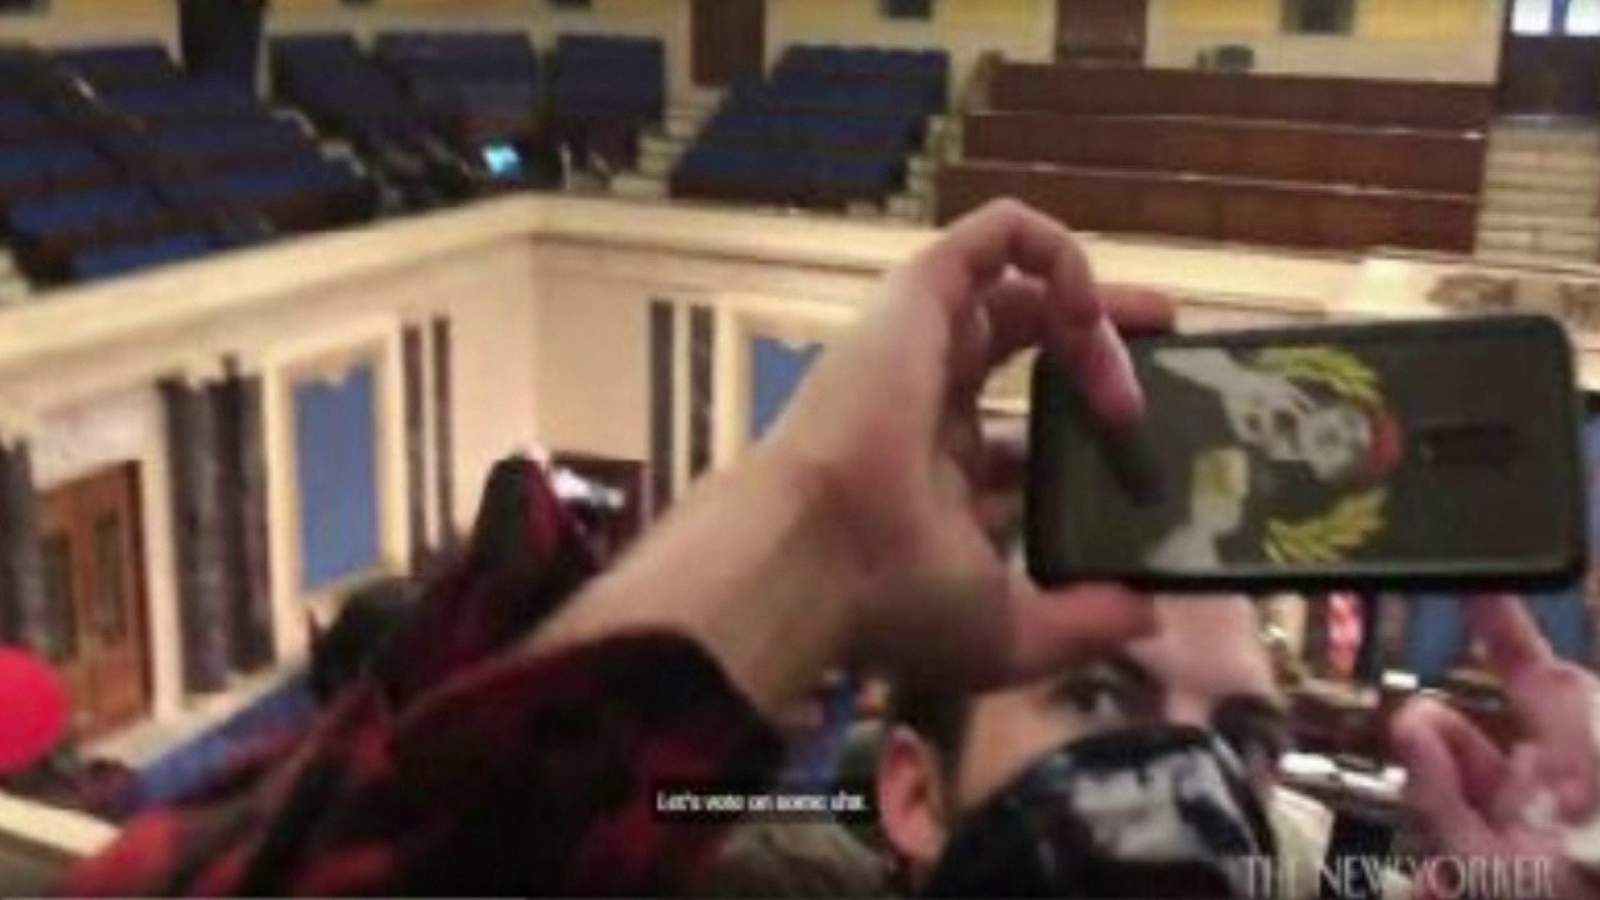 Capitol riot suspect in custody in Orlando took selfie inside Senate chamber, feds say